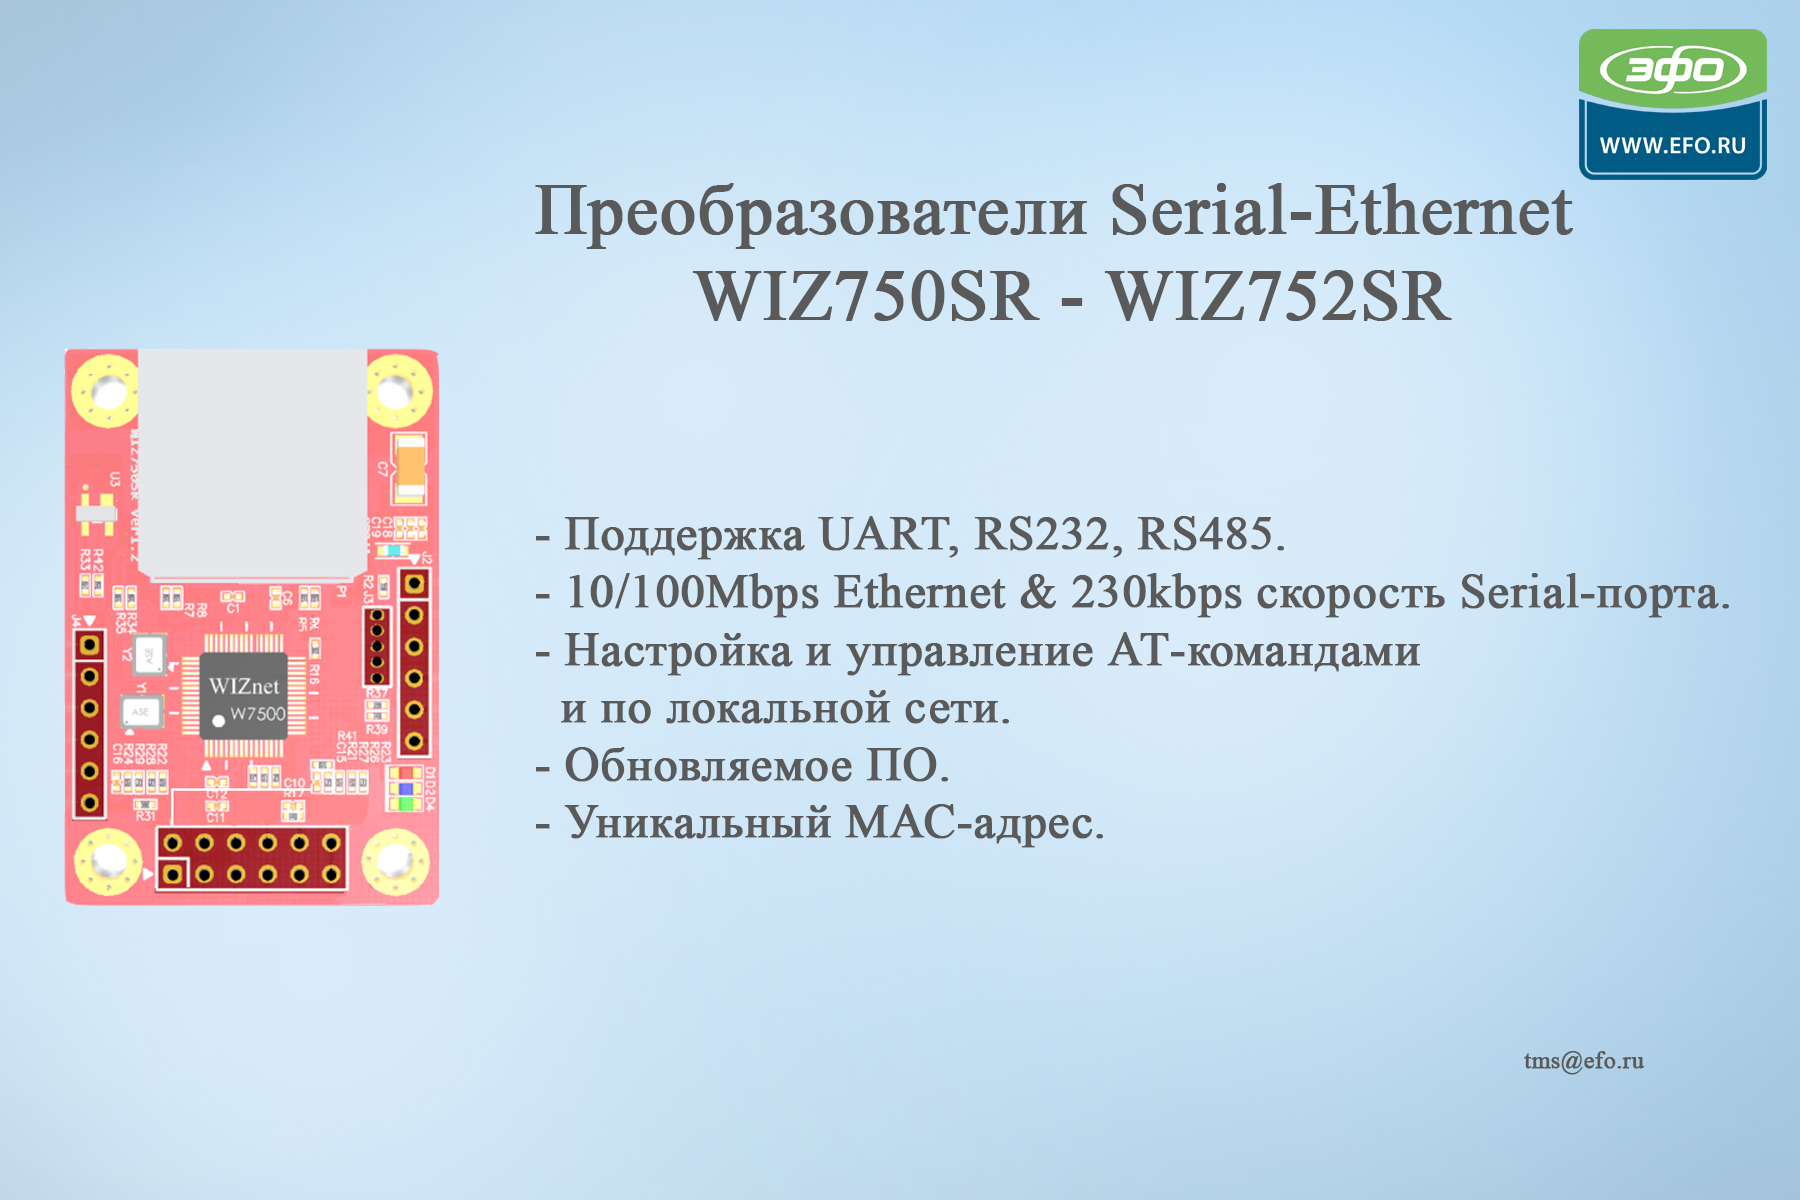 Serial-Ethernet  модули WIZ750SR и WIZ752SR, и начало работы с ними